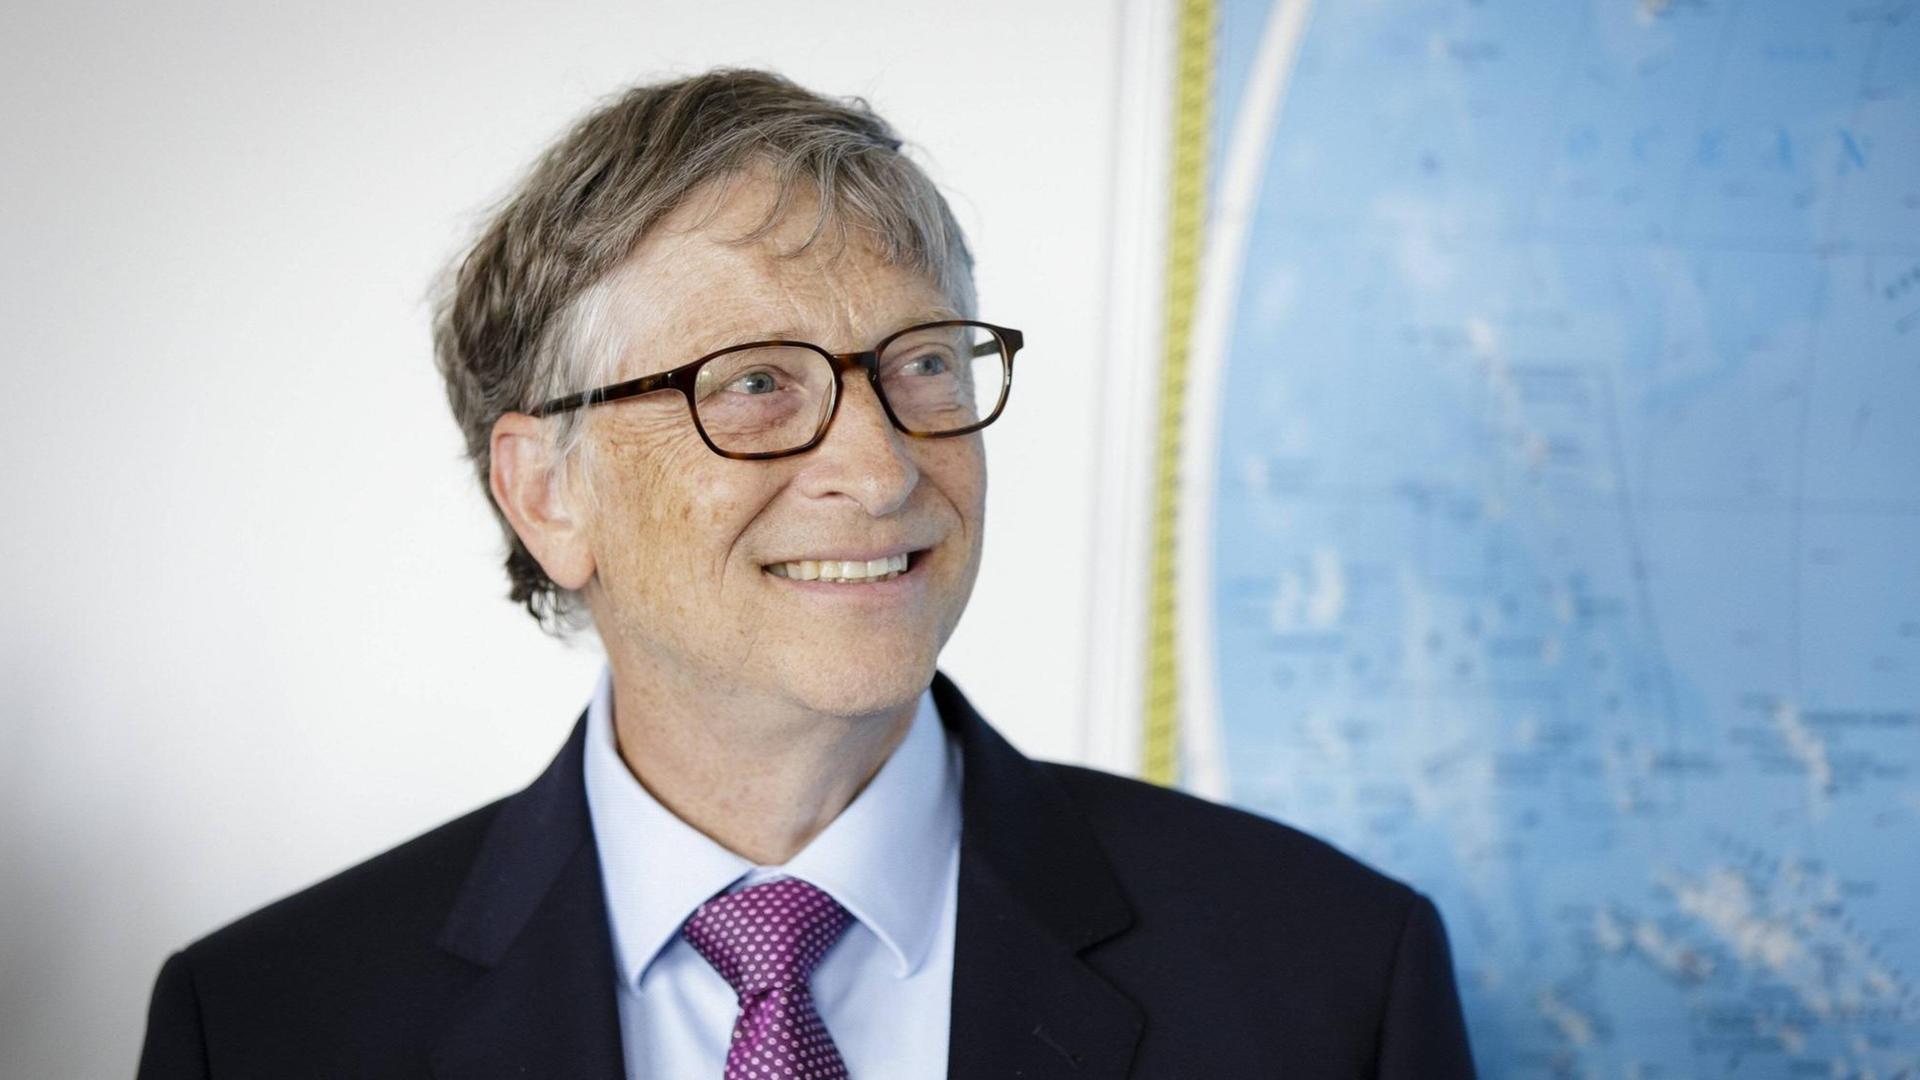 Bill Gates im Porträt